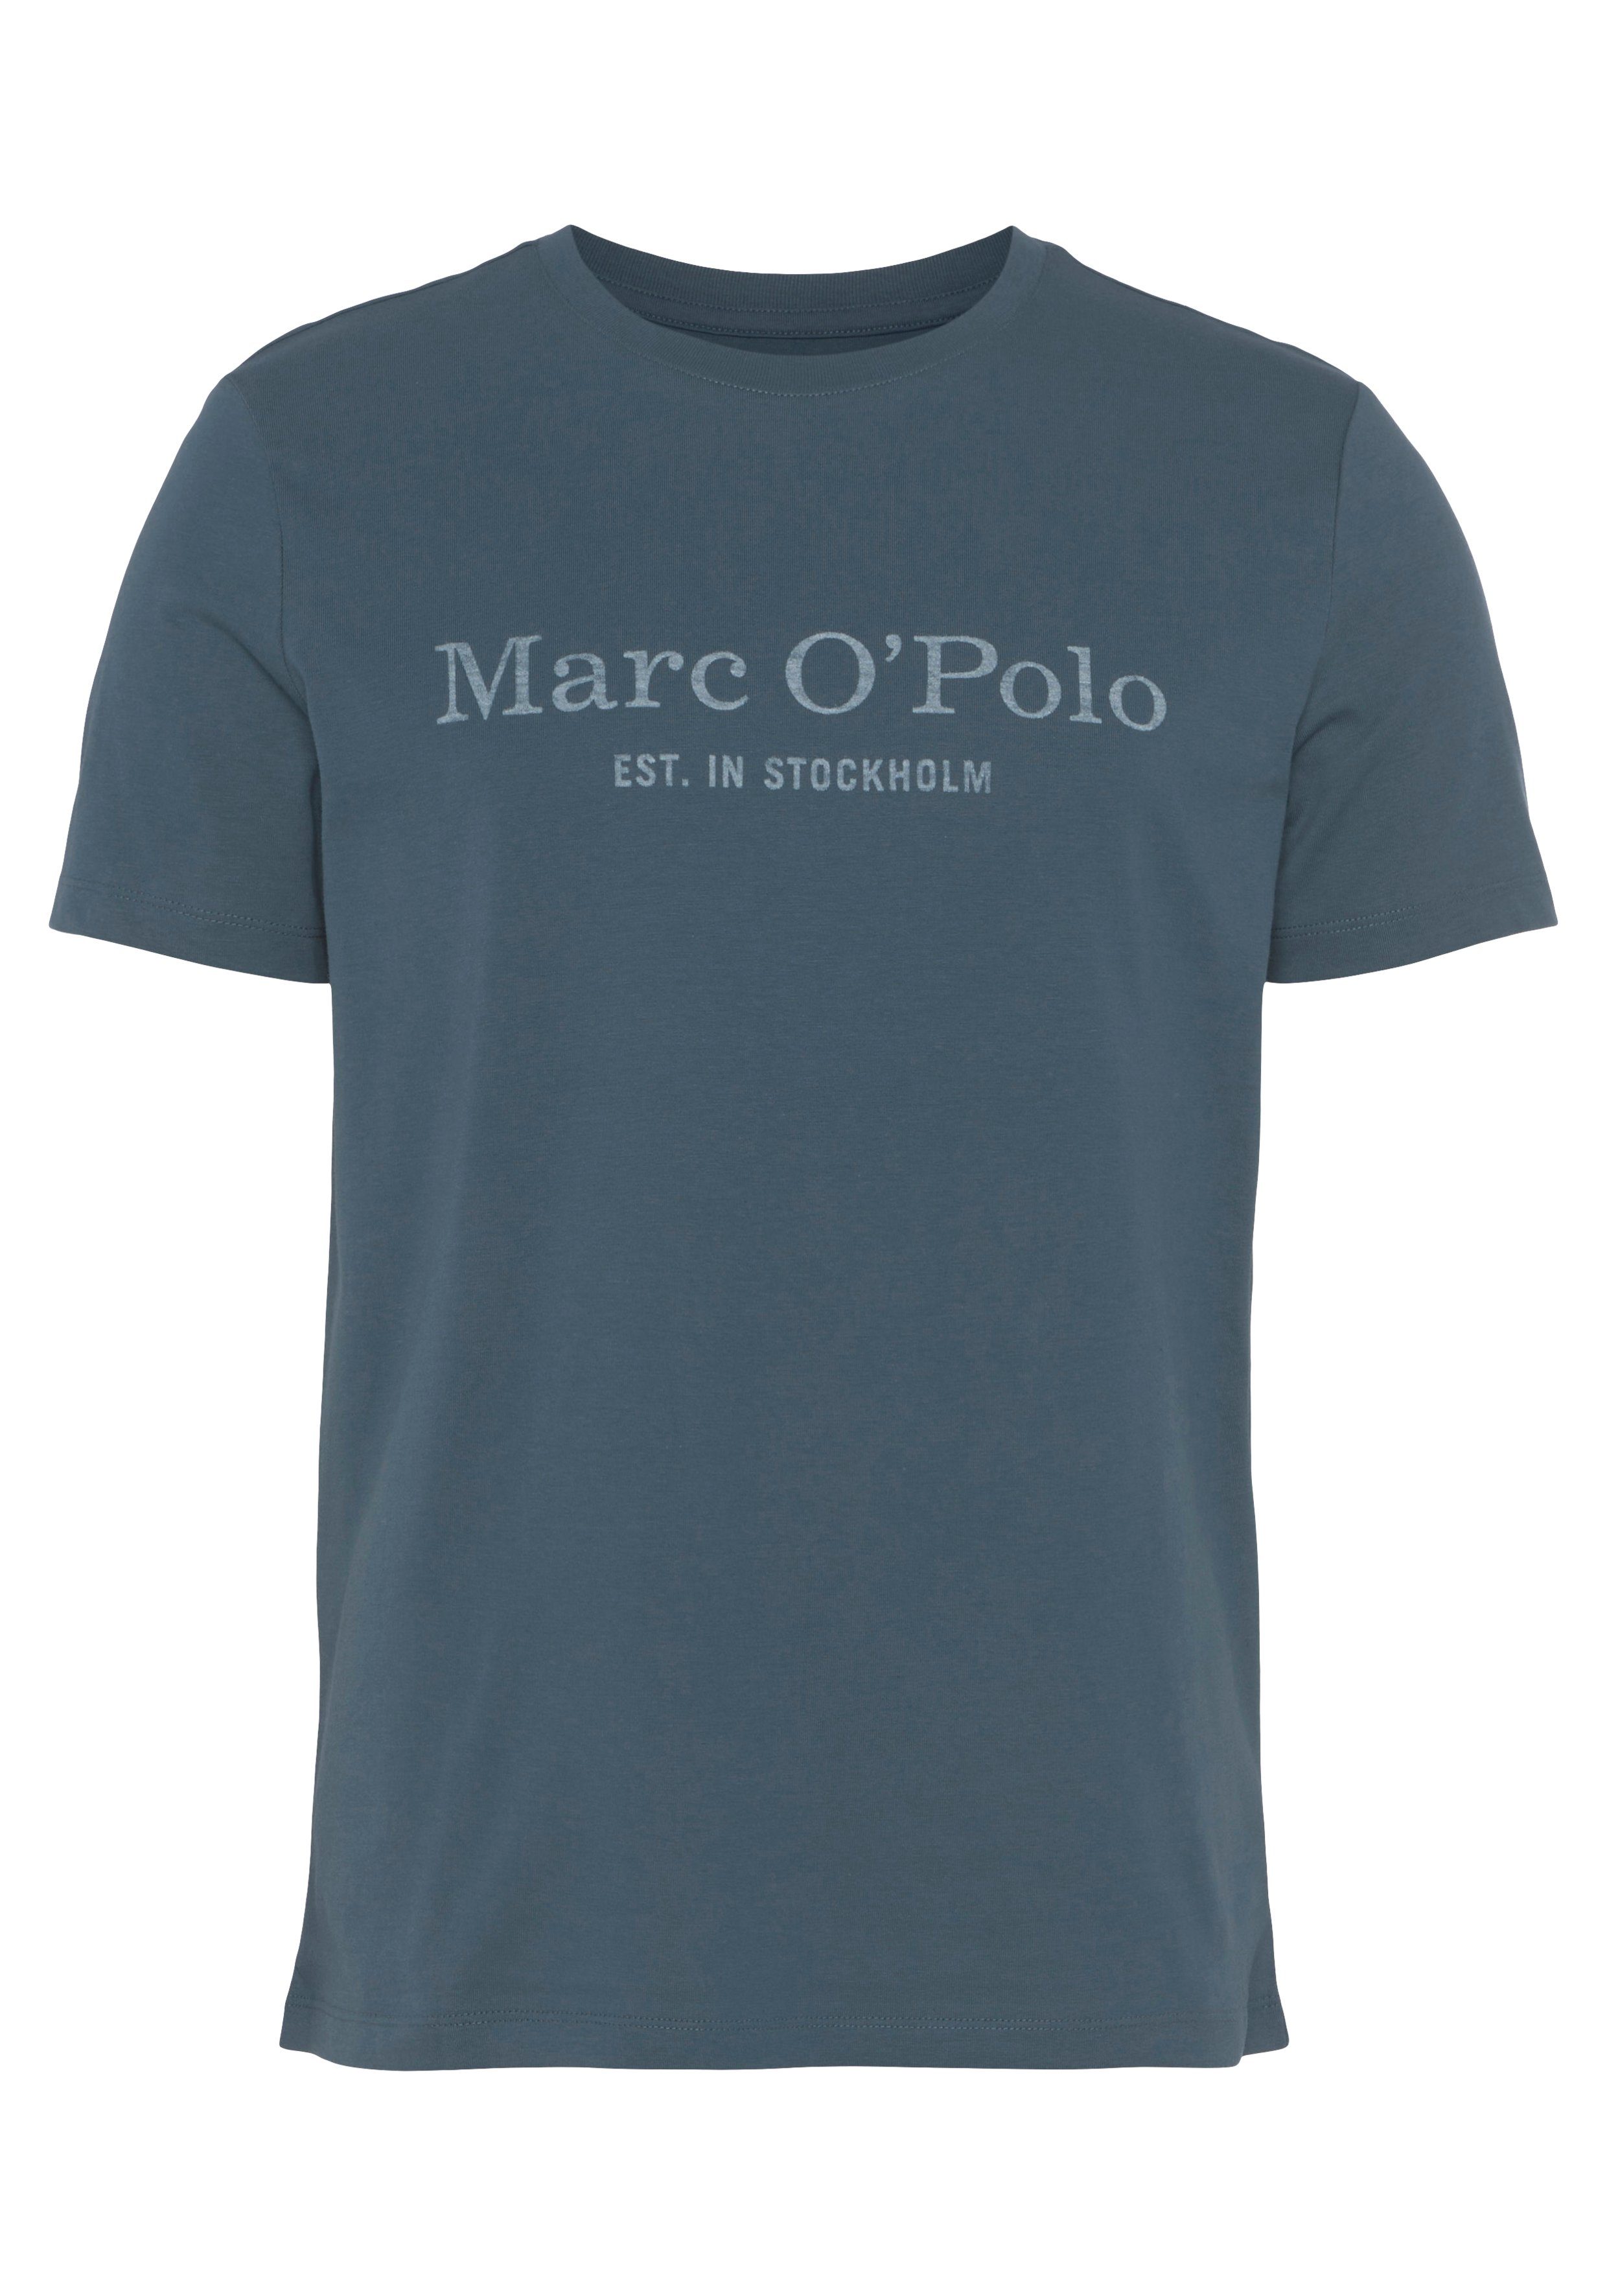 Marc O'Polo SALE & Outlet » günstig & reduziert | OTTO